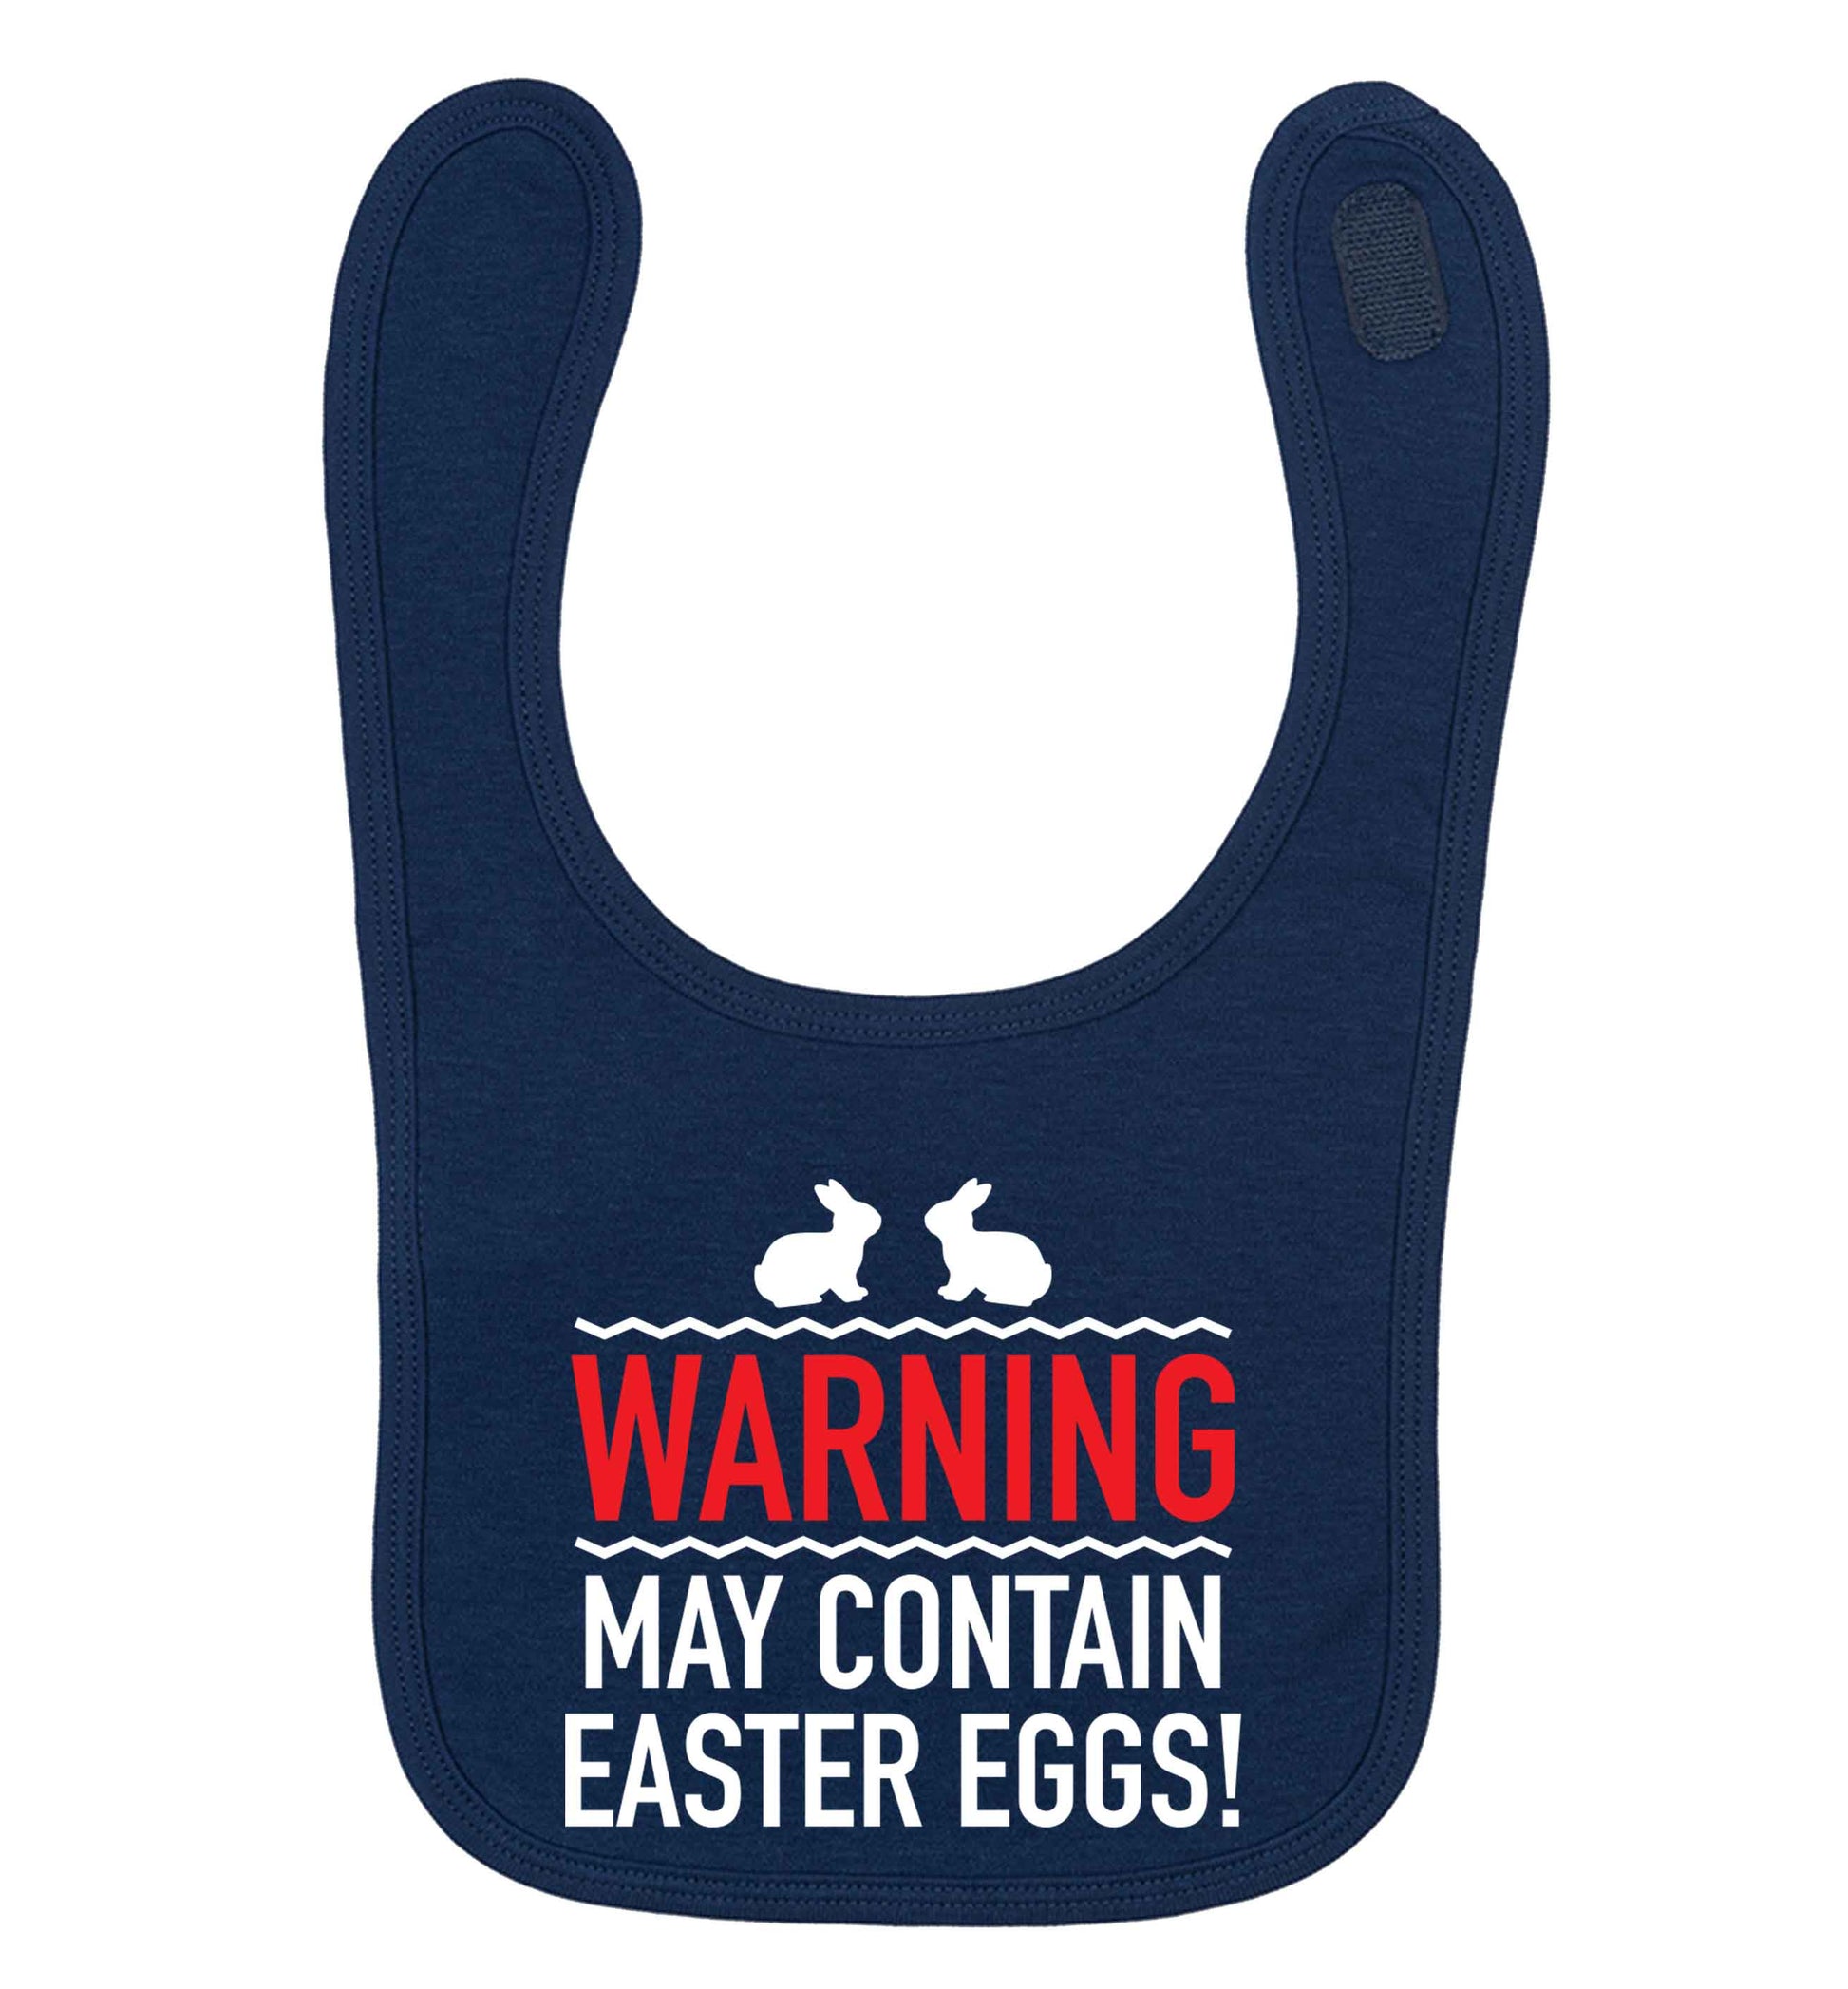 Warning may contain Easter eggs navy baby bib